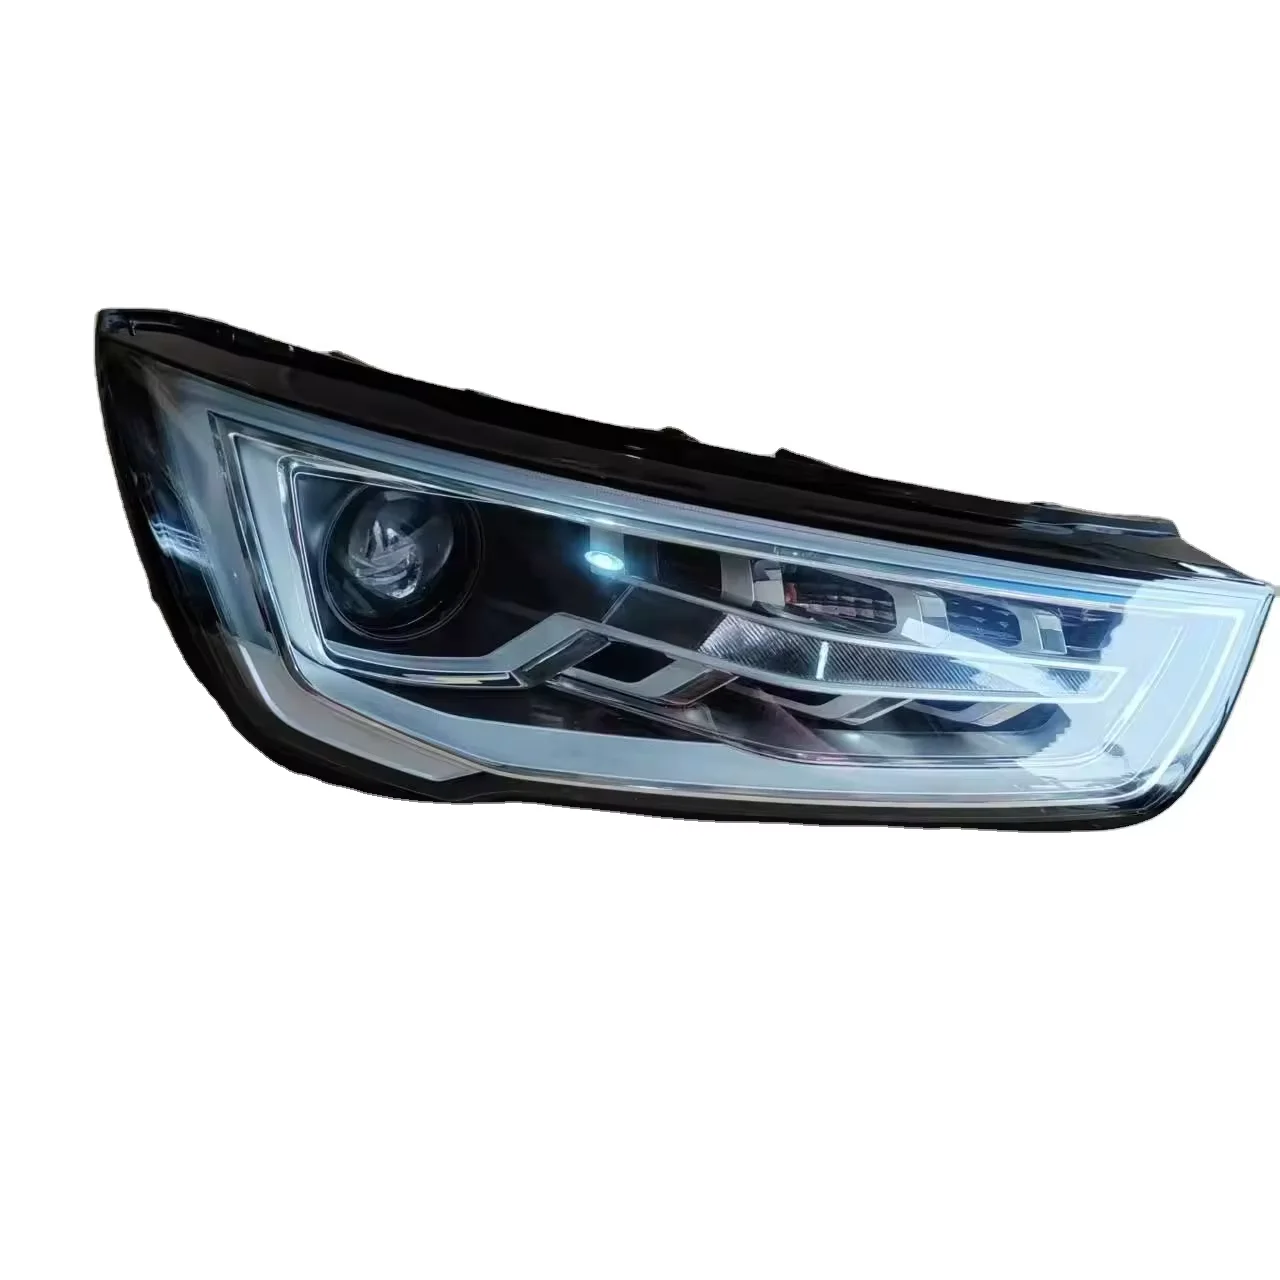 

for Audi Auto A1 Manufacturer Direct Sales Original car lights led headlight Lighting System Parts